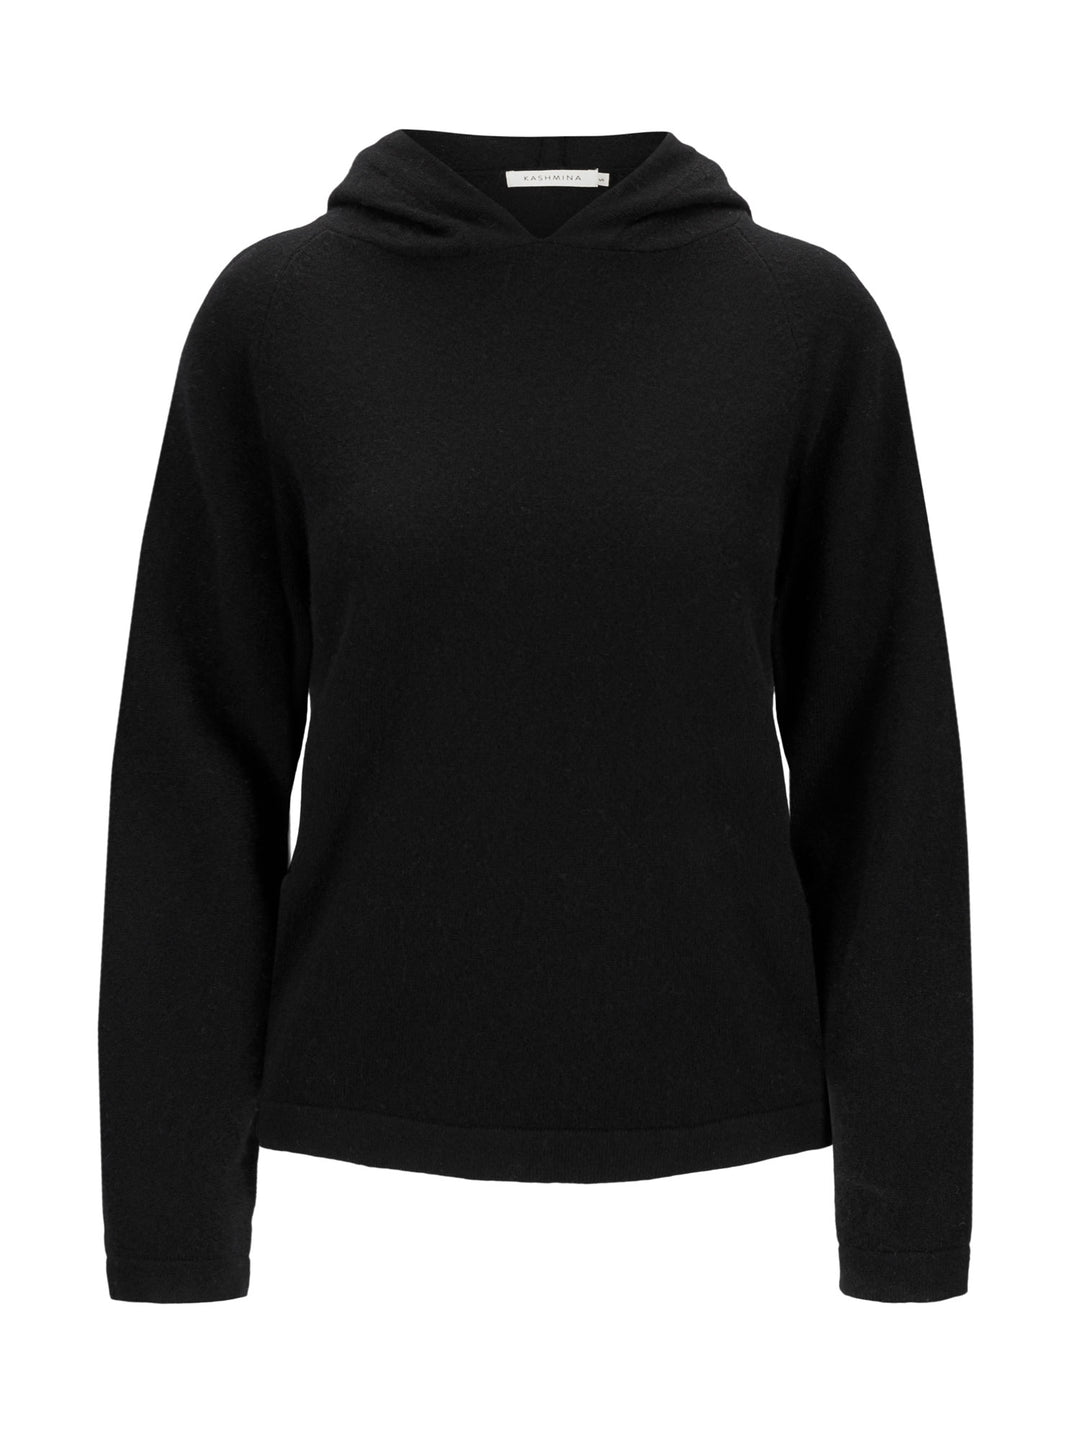 Cashmere hoodie made of 100% pure cashmere. Color: Black. Scandinavian design by Kashmina.